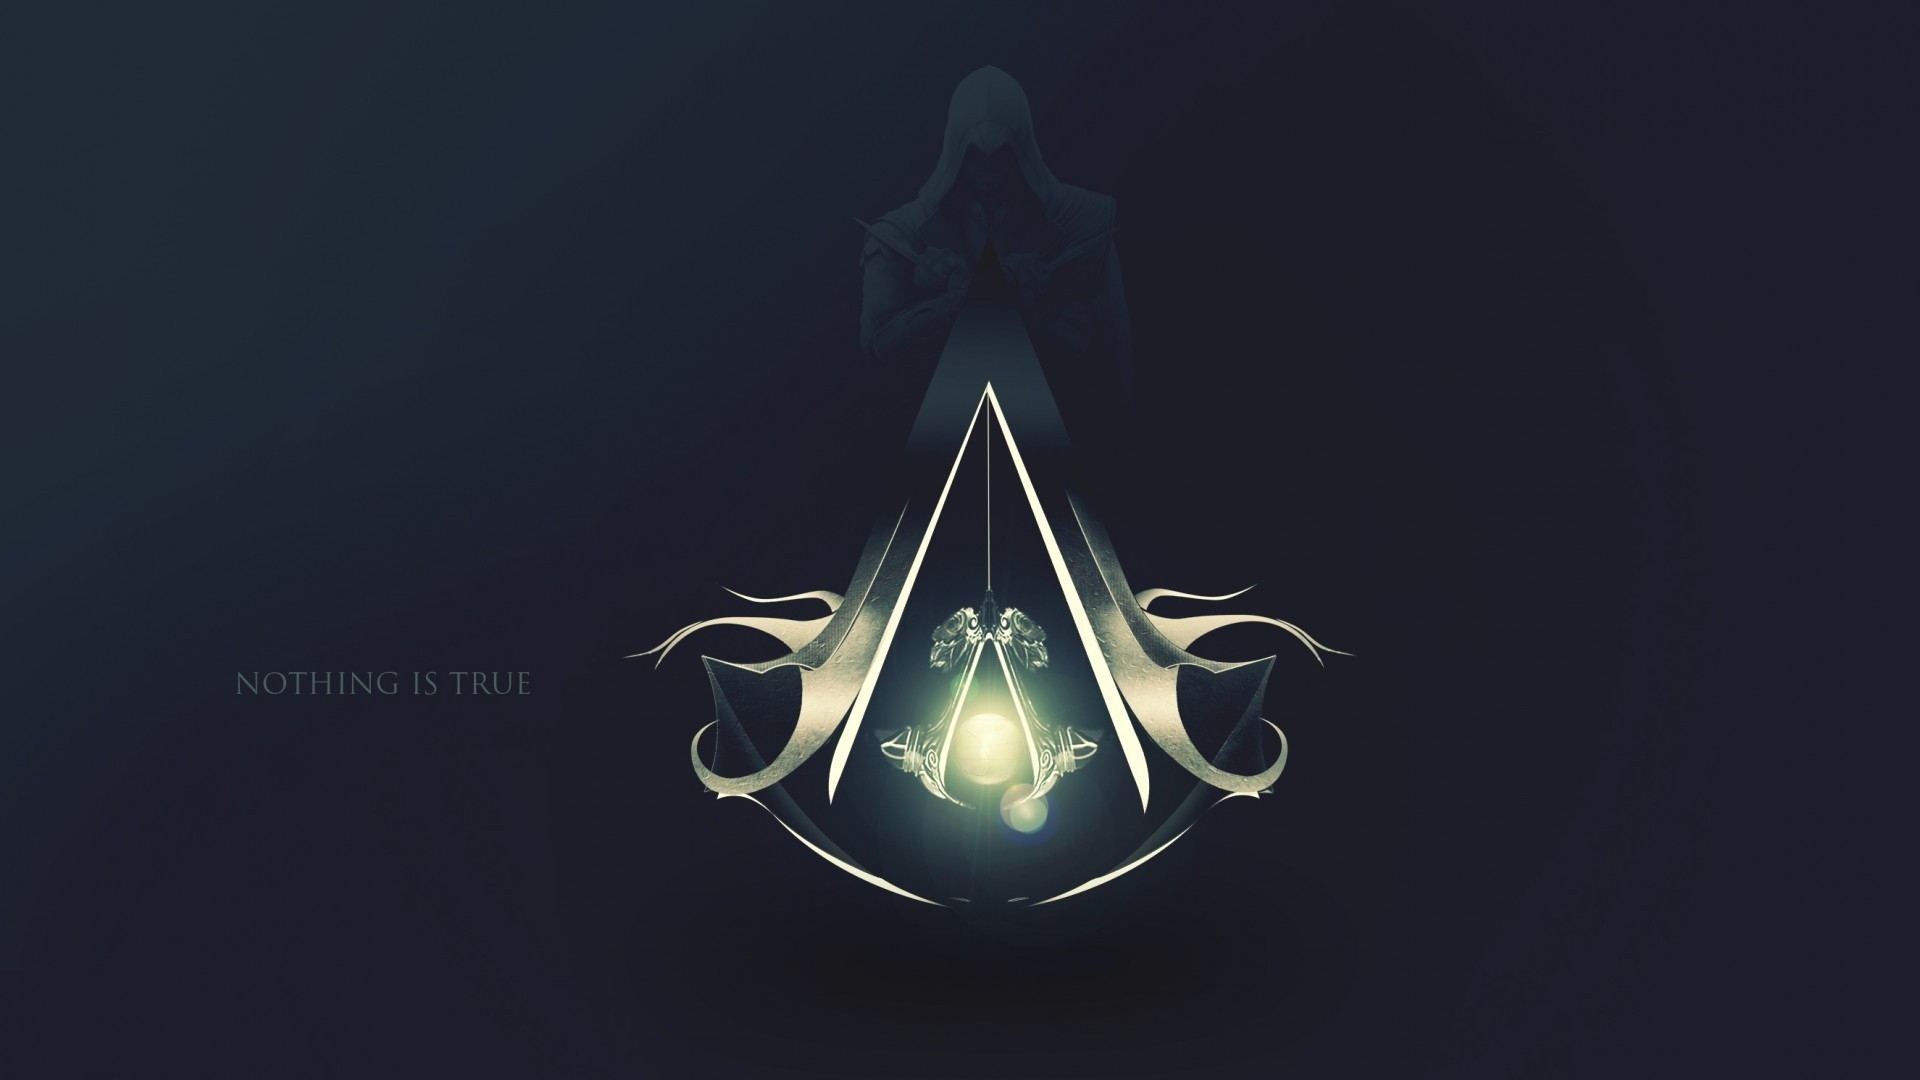 Assassin's Creed Brotherhood - The Assassin's fondo de pantalla (31958393)  - fanpop